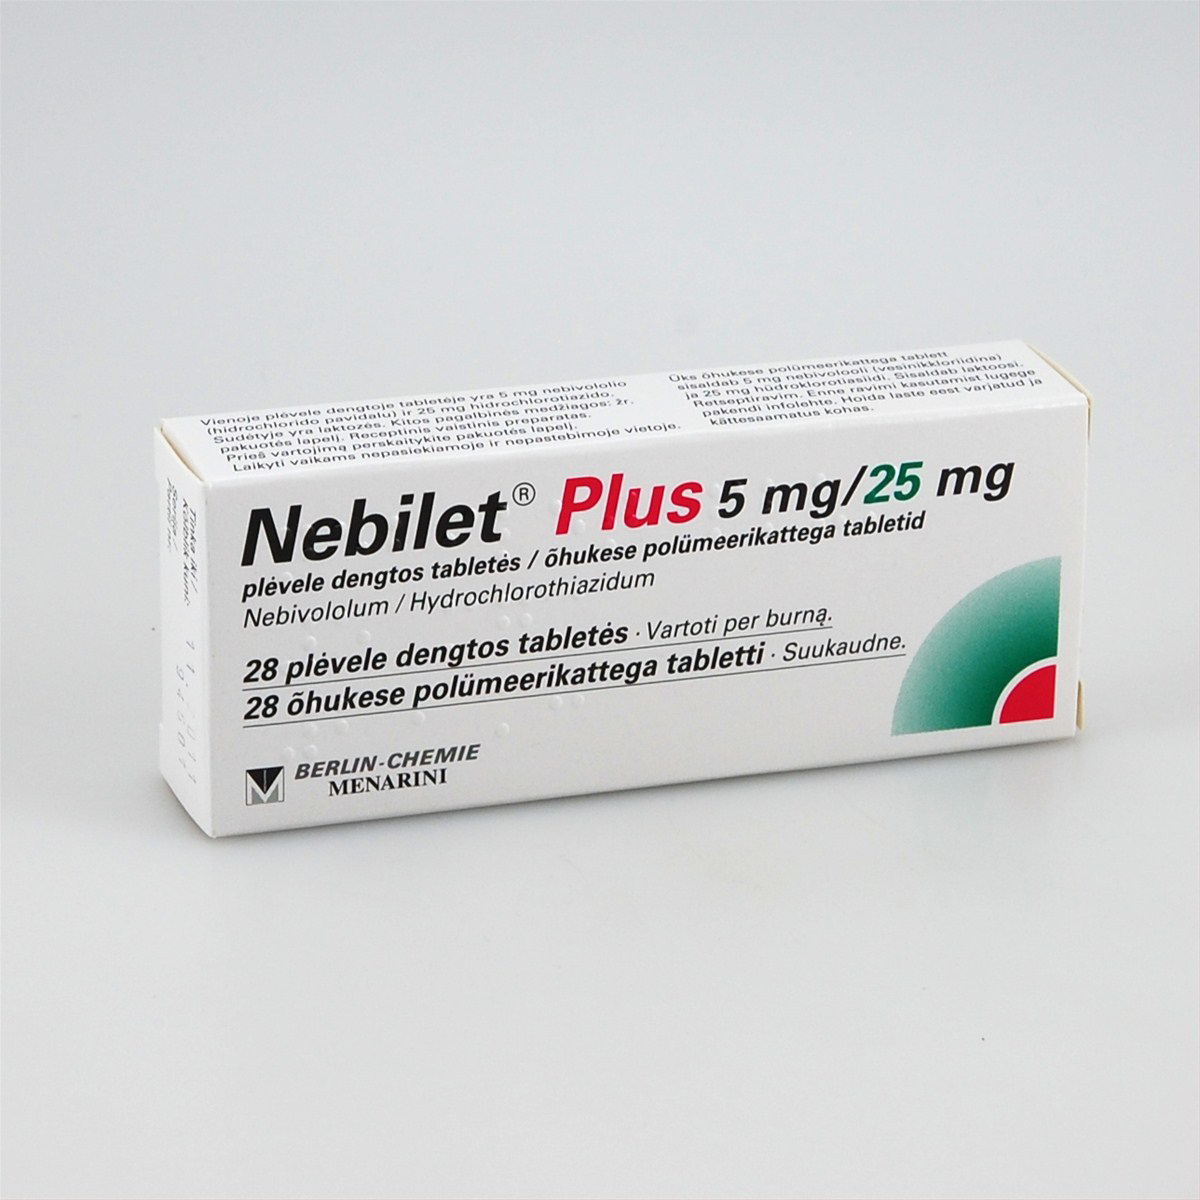 Небилет 5 мг. Небилет 2.5 мг. Небилет плюс. Небилет 28 т Германия 5 мг.